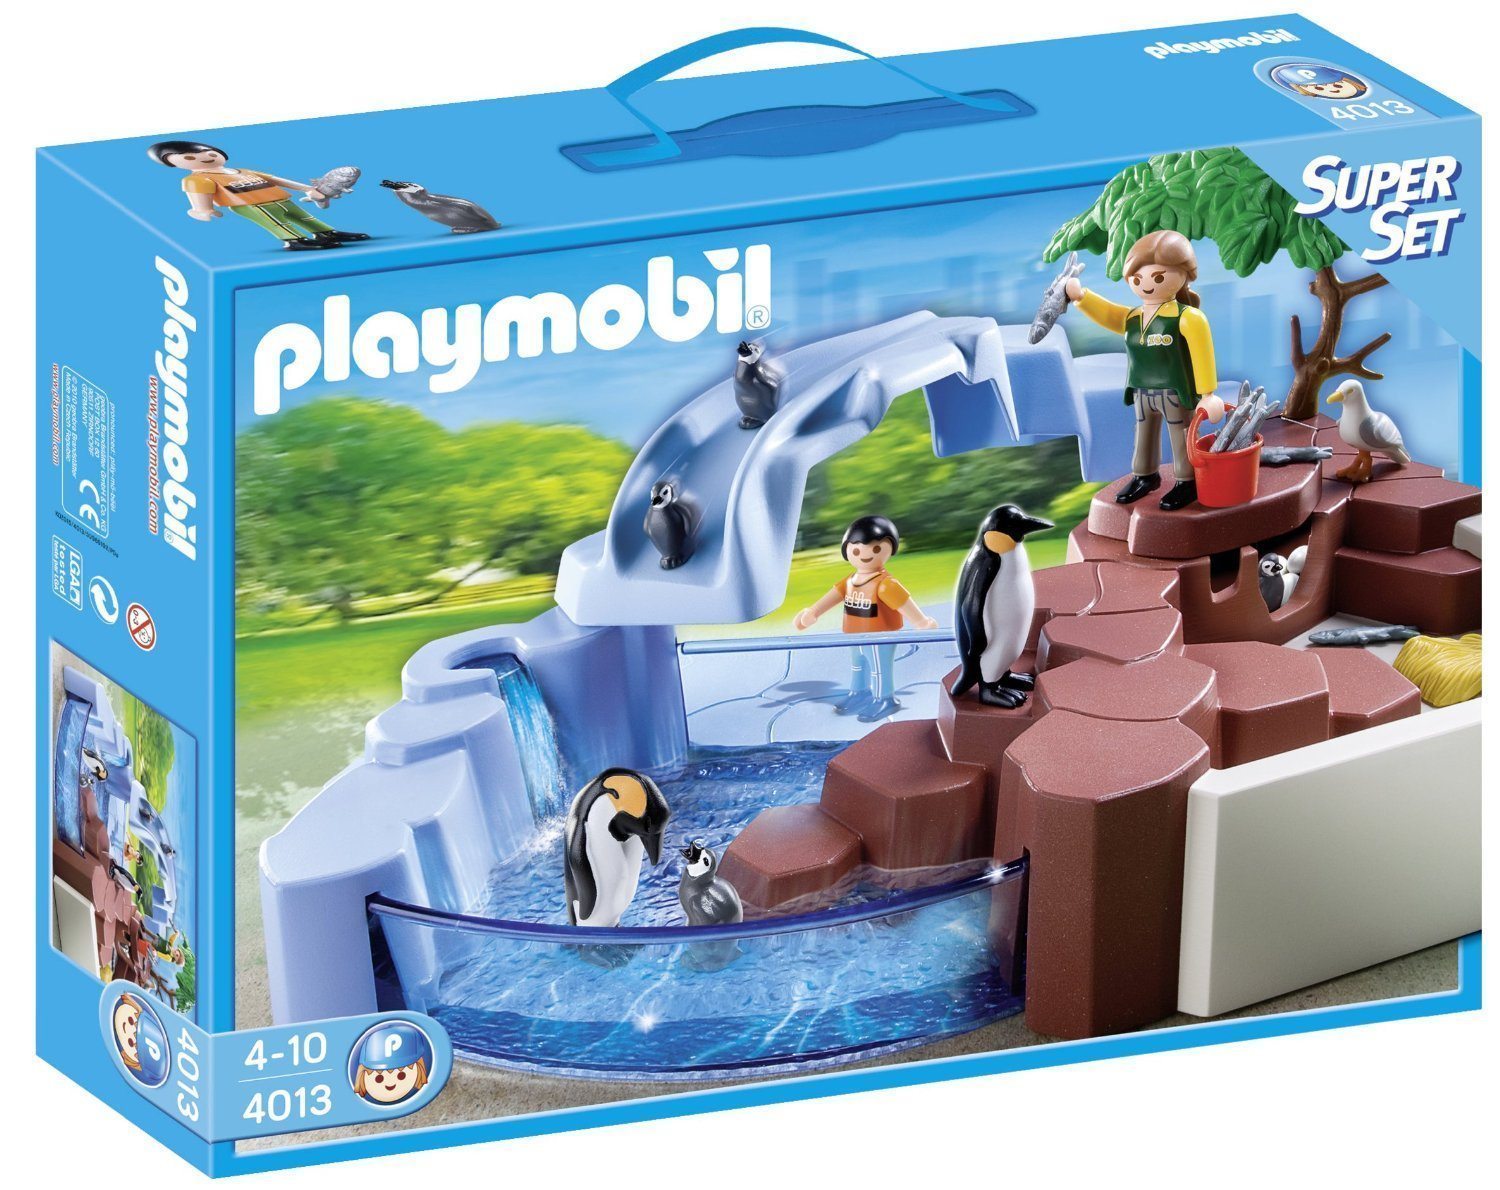 Playmobil - Zoo: superset piscina pingüinos (4013)